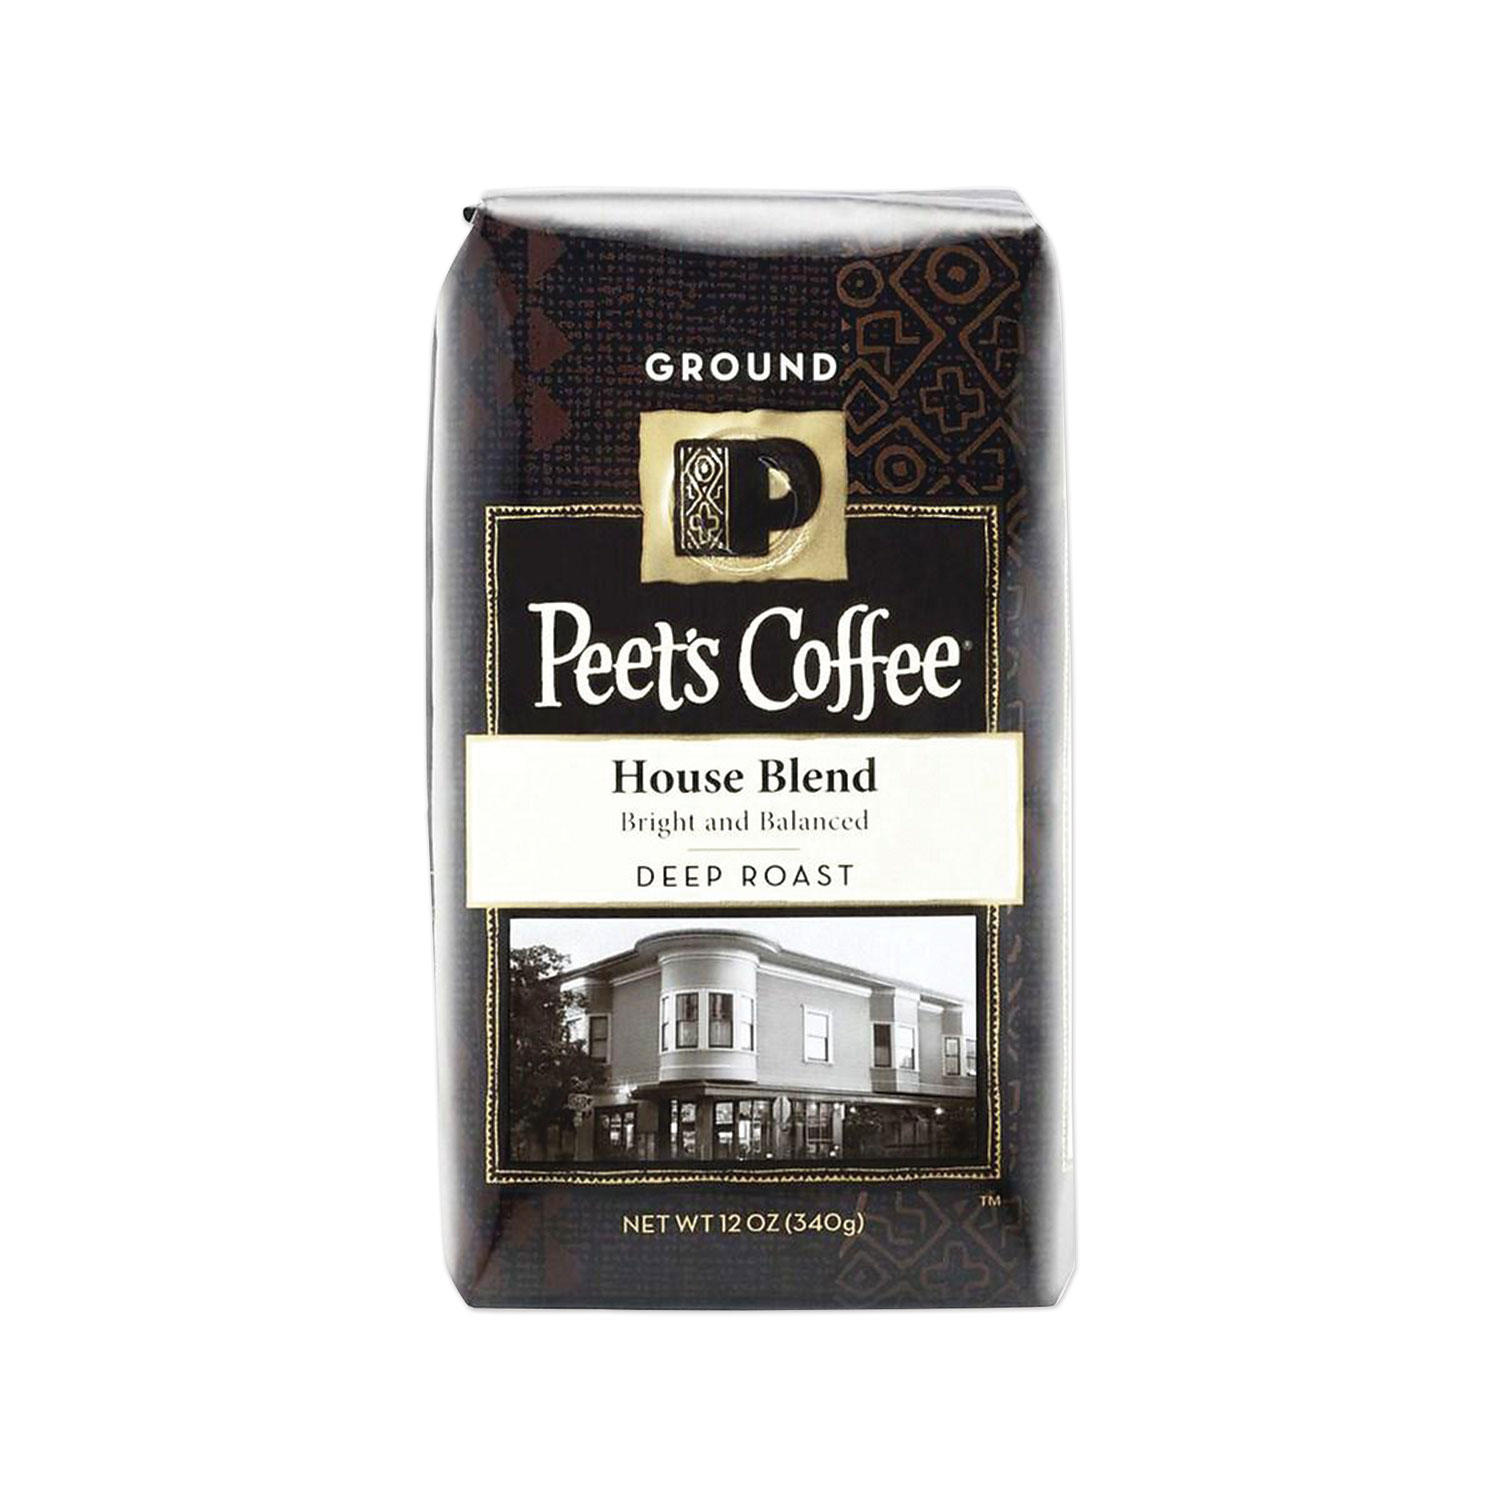  Peet's Coffee & Tea PCE835261 House Blend Ground Coffee, 12 oz Bag (PEE835261) 